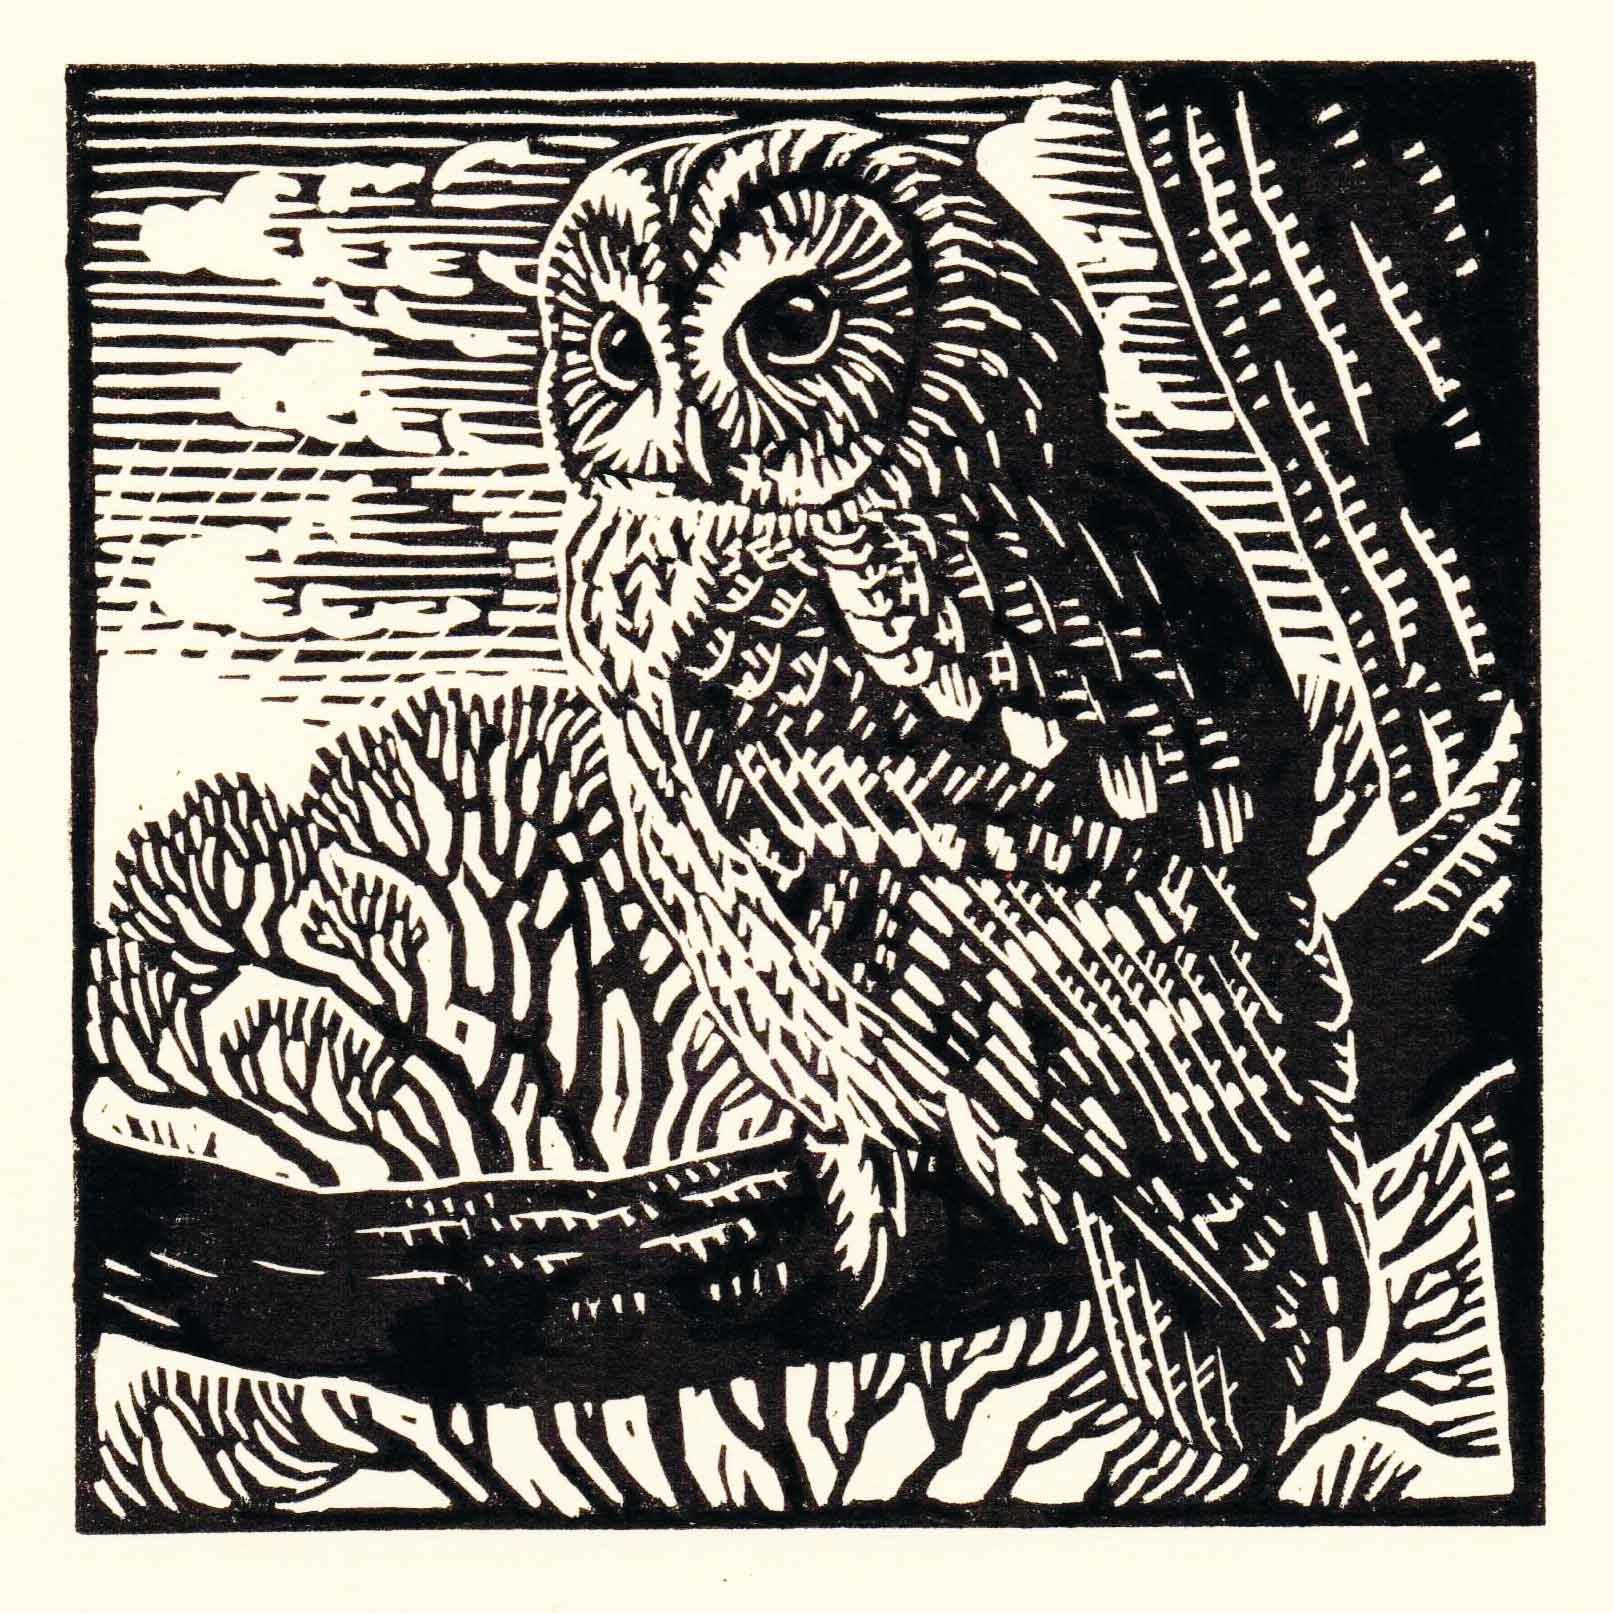 Art Greeting Card by Richard Allen, Linocut, Tawny owl on branch